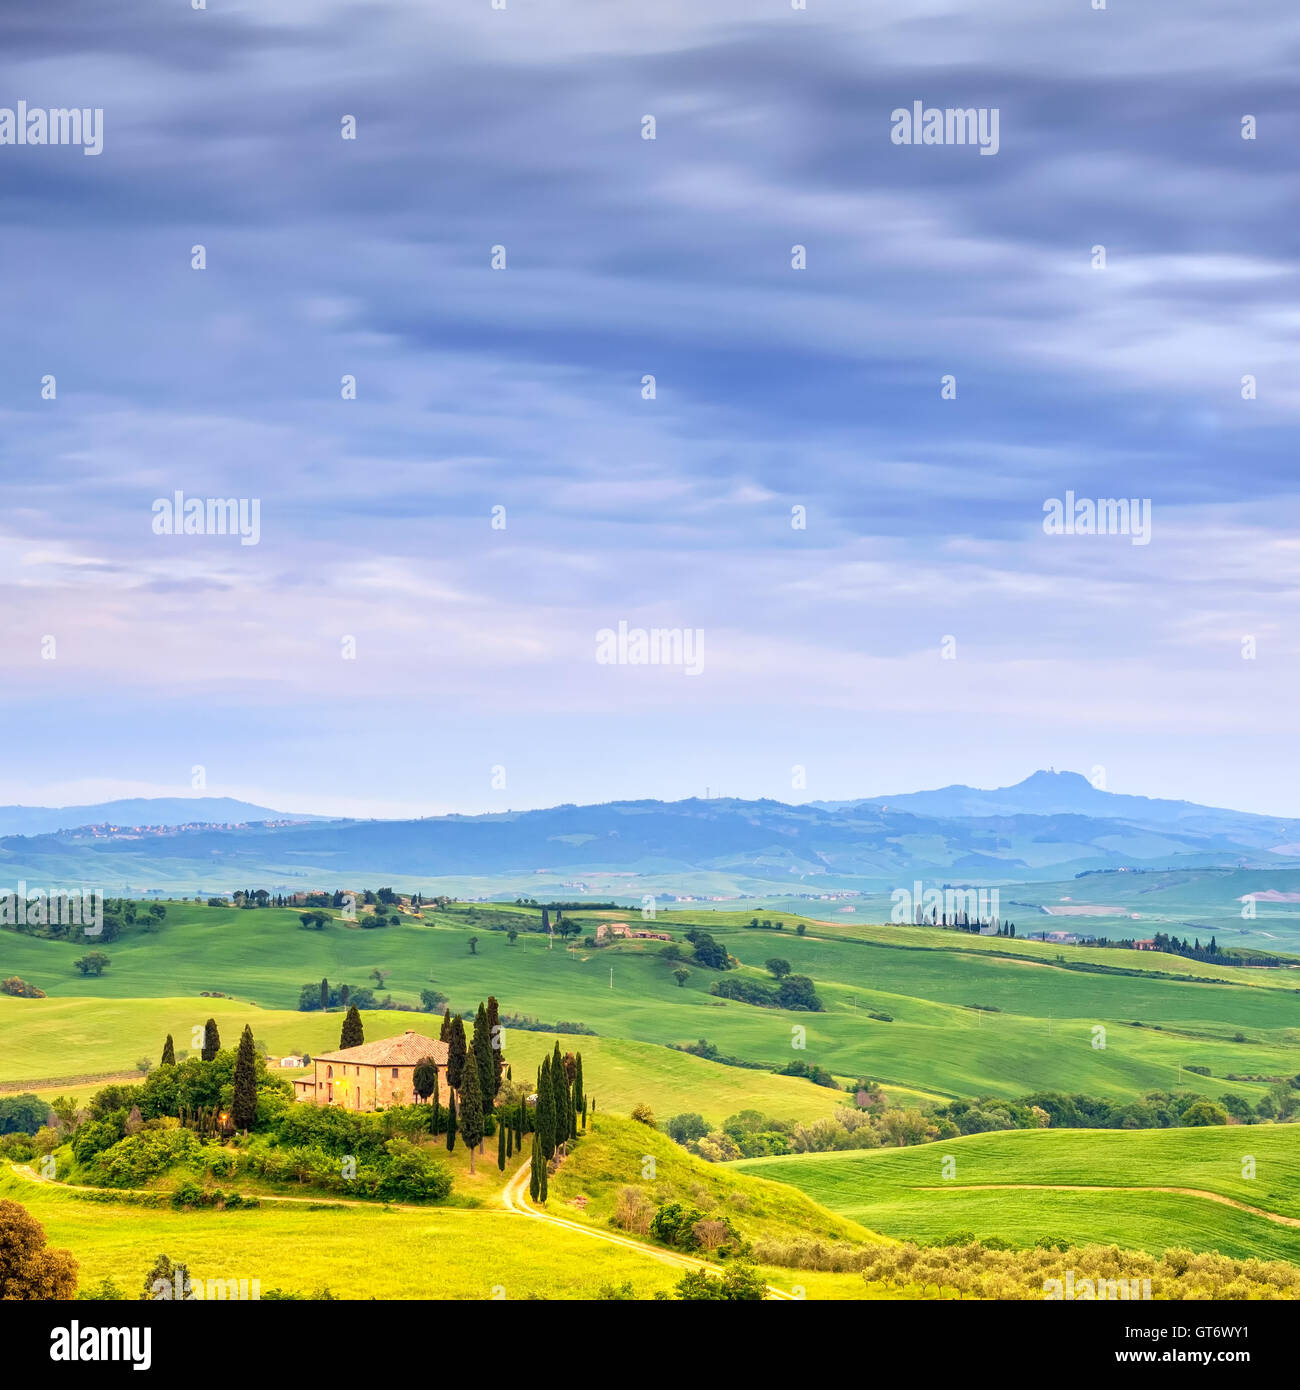 Toskana, Ackerland und Zypresse Bäume Land Landschaft, grüne Felder. San Quirico Orcia, Italien, Europa. Stockfoto